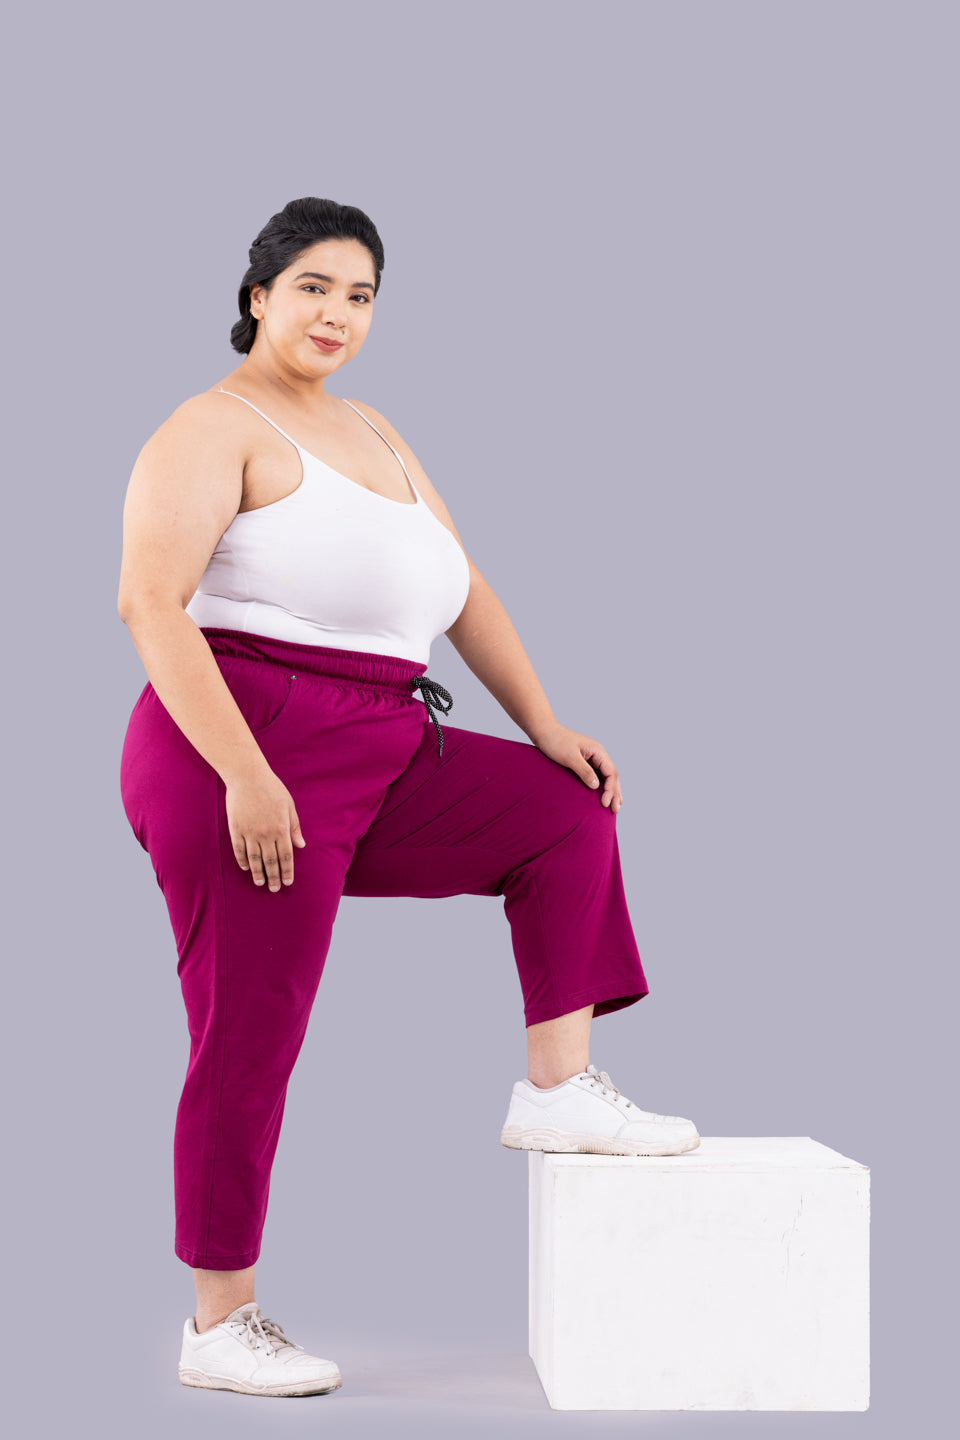 Mrat Oversized Pants For Women Capris Yoga Pants Fashion Ladies